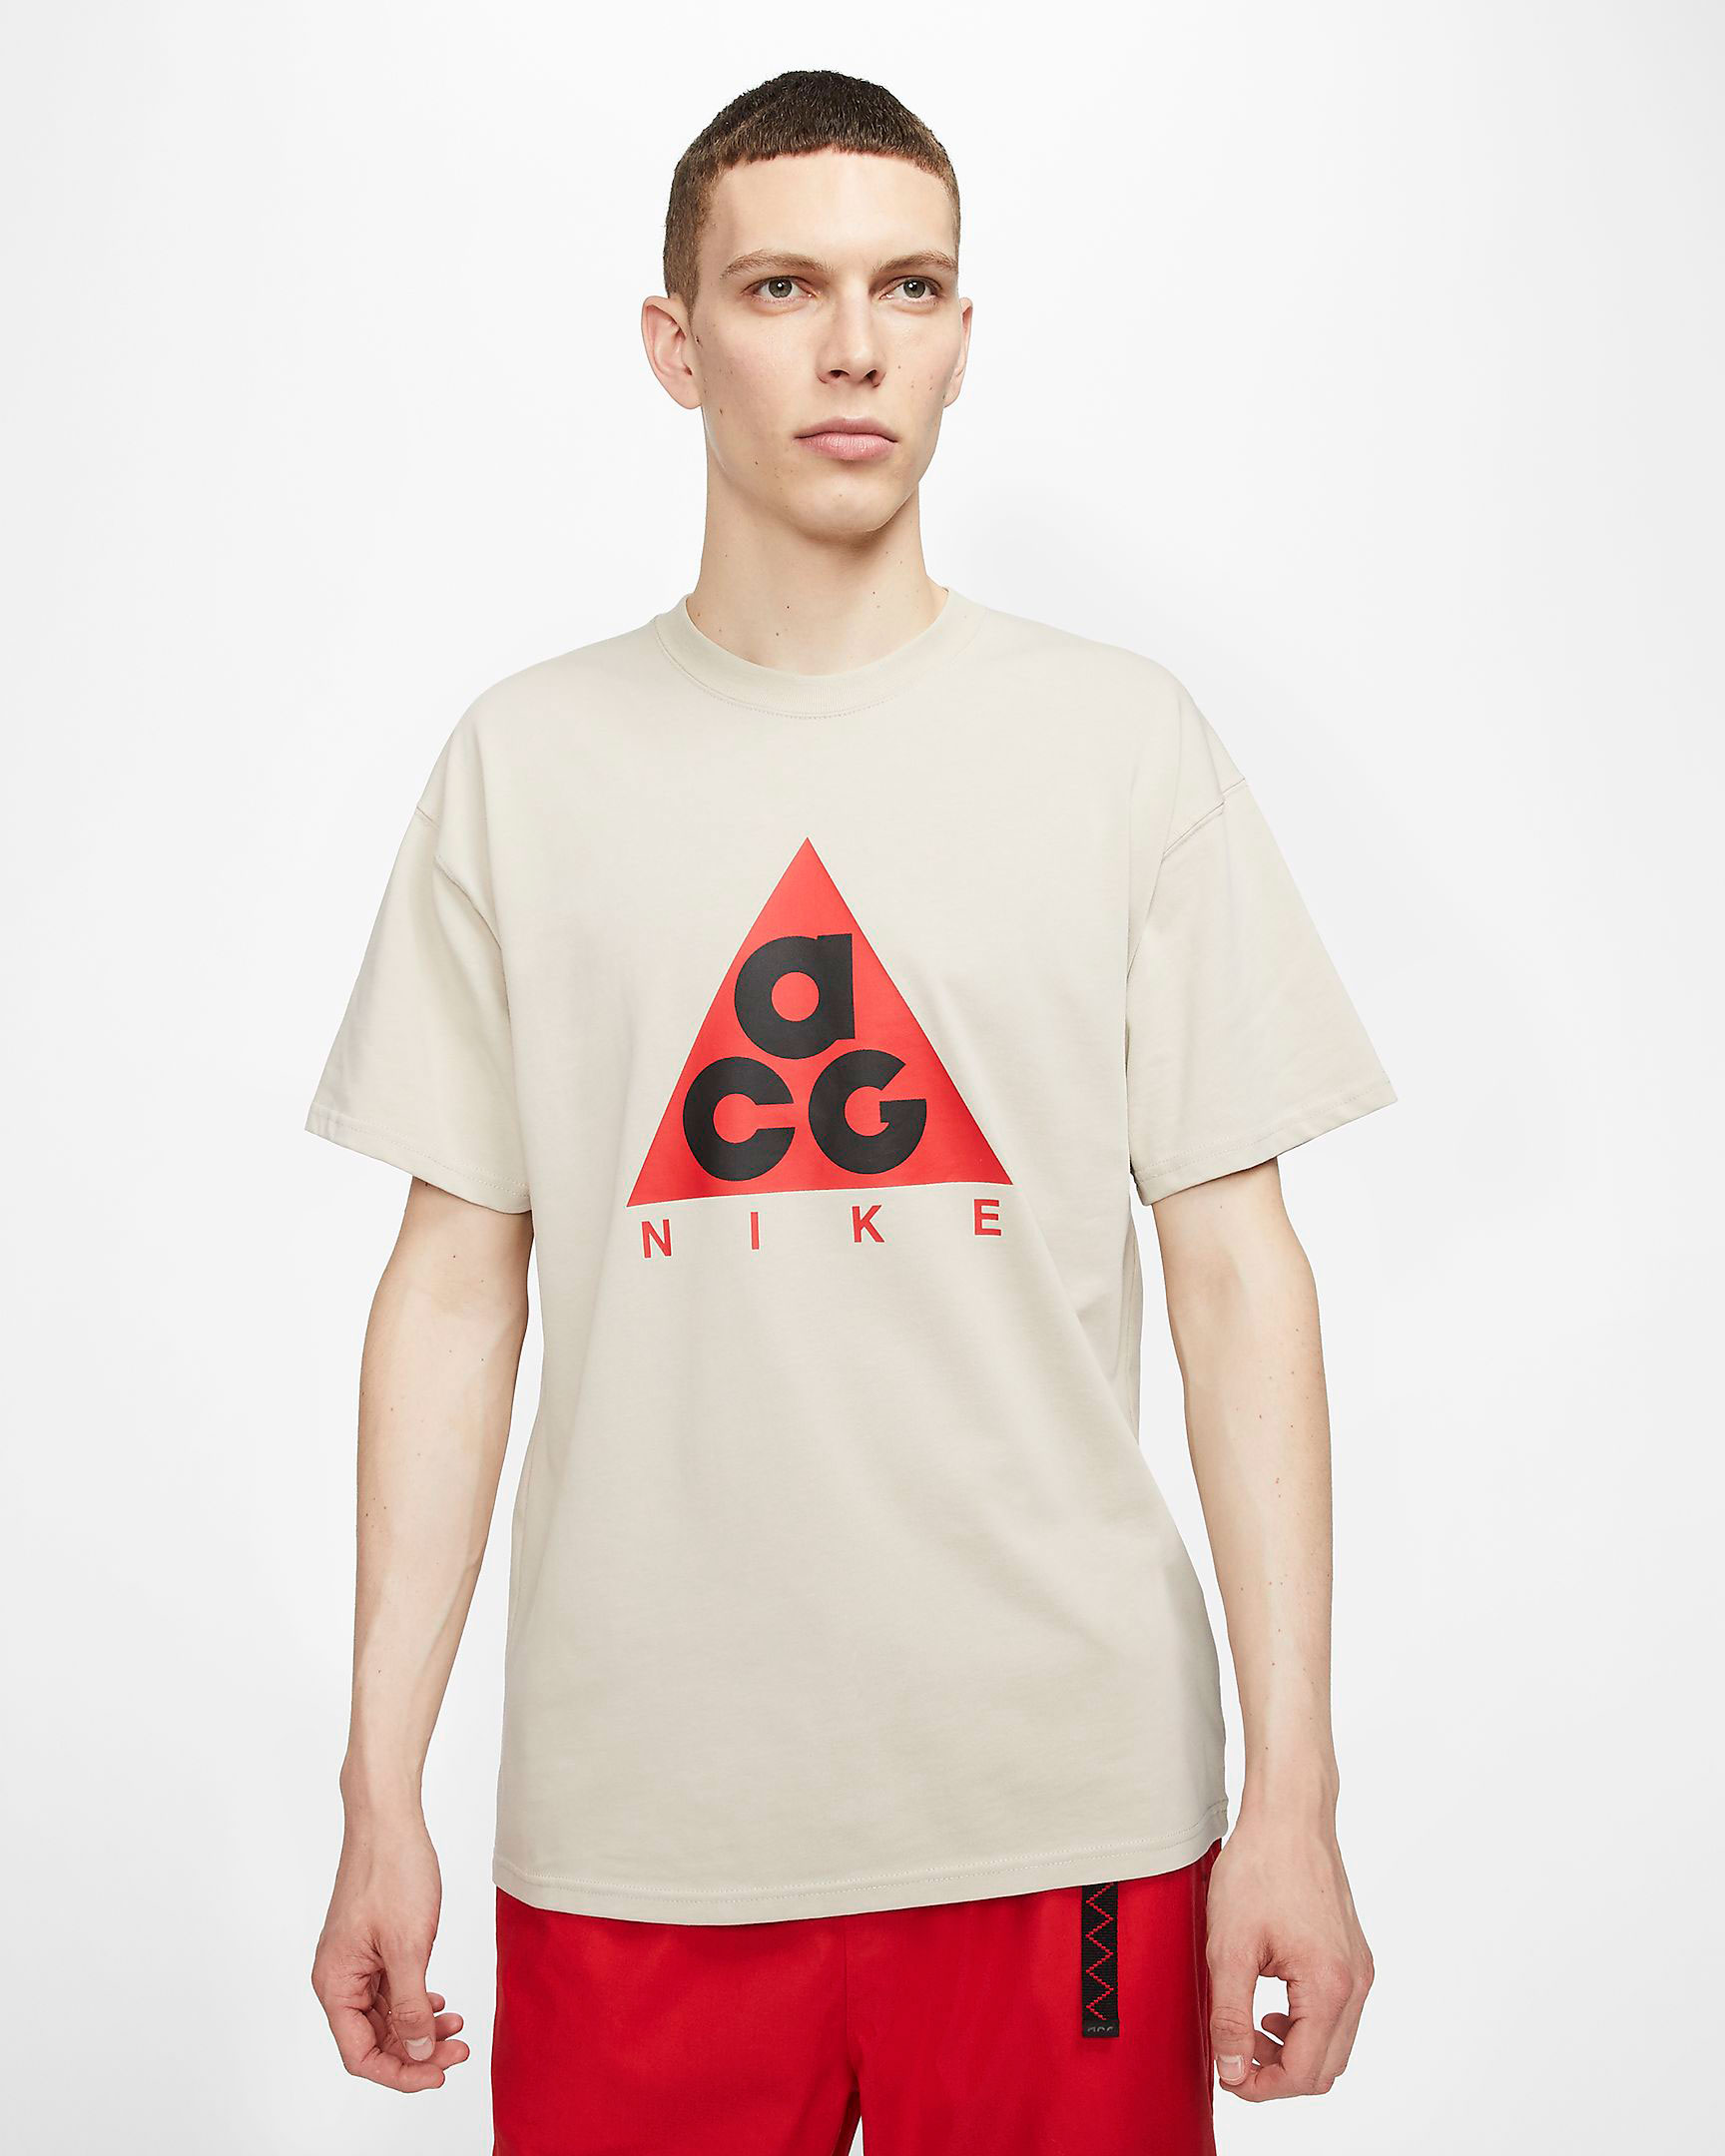 nike-acg-logo-t-shirt-khaki-red